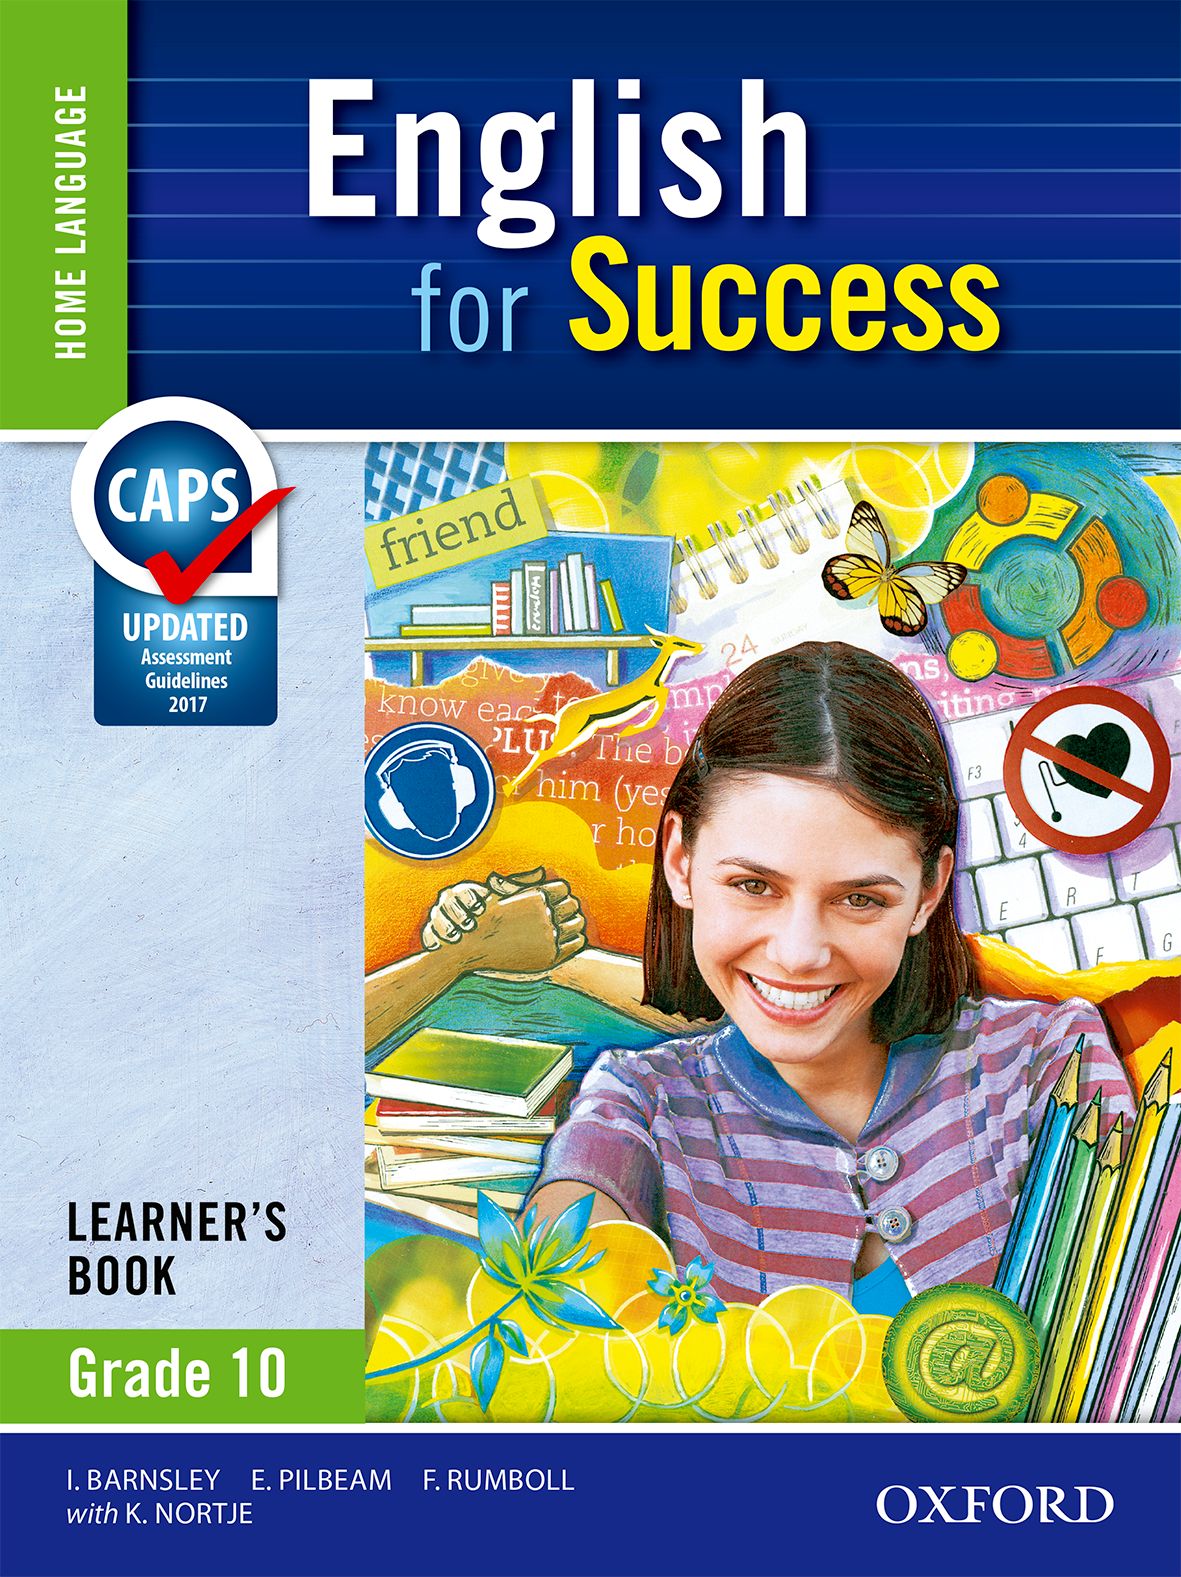 Oxford University Press :: English for Success Grade 10 Learner's Book